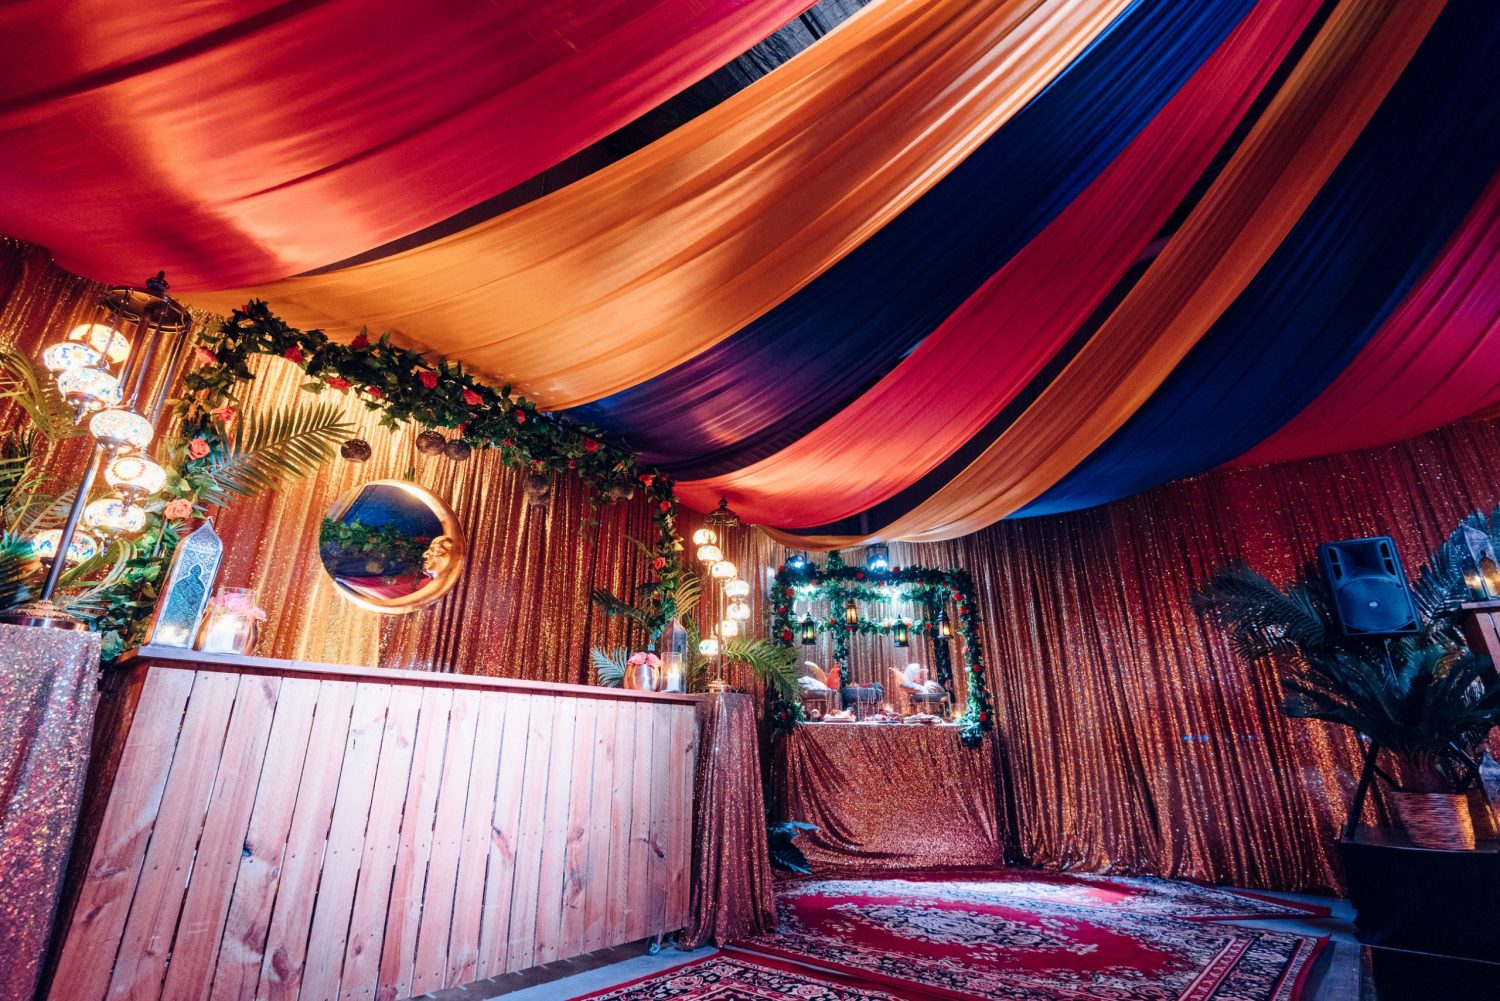 arabian nights theme ceiling draping, wooden bar, carpet